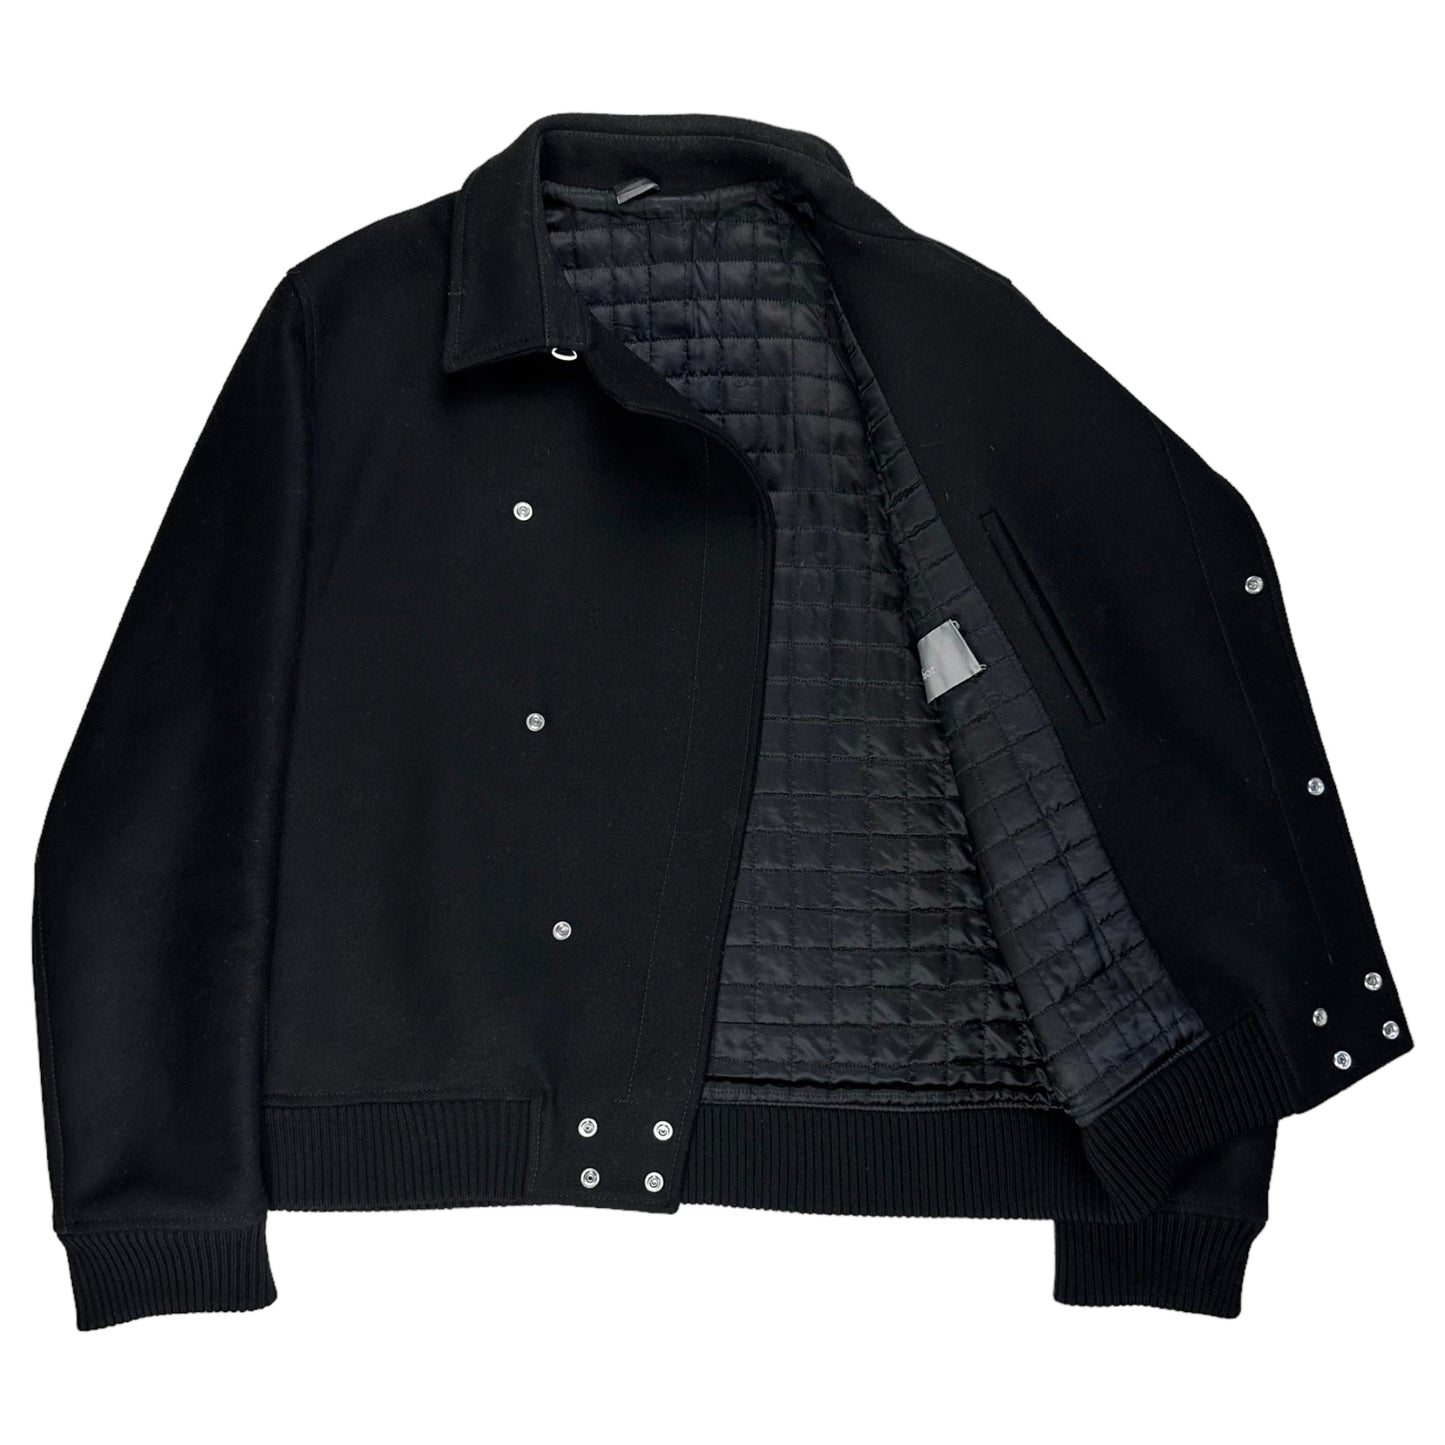 Dior Homme Snap Button Biker Wool Jacket - AW09